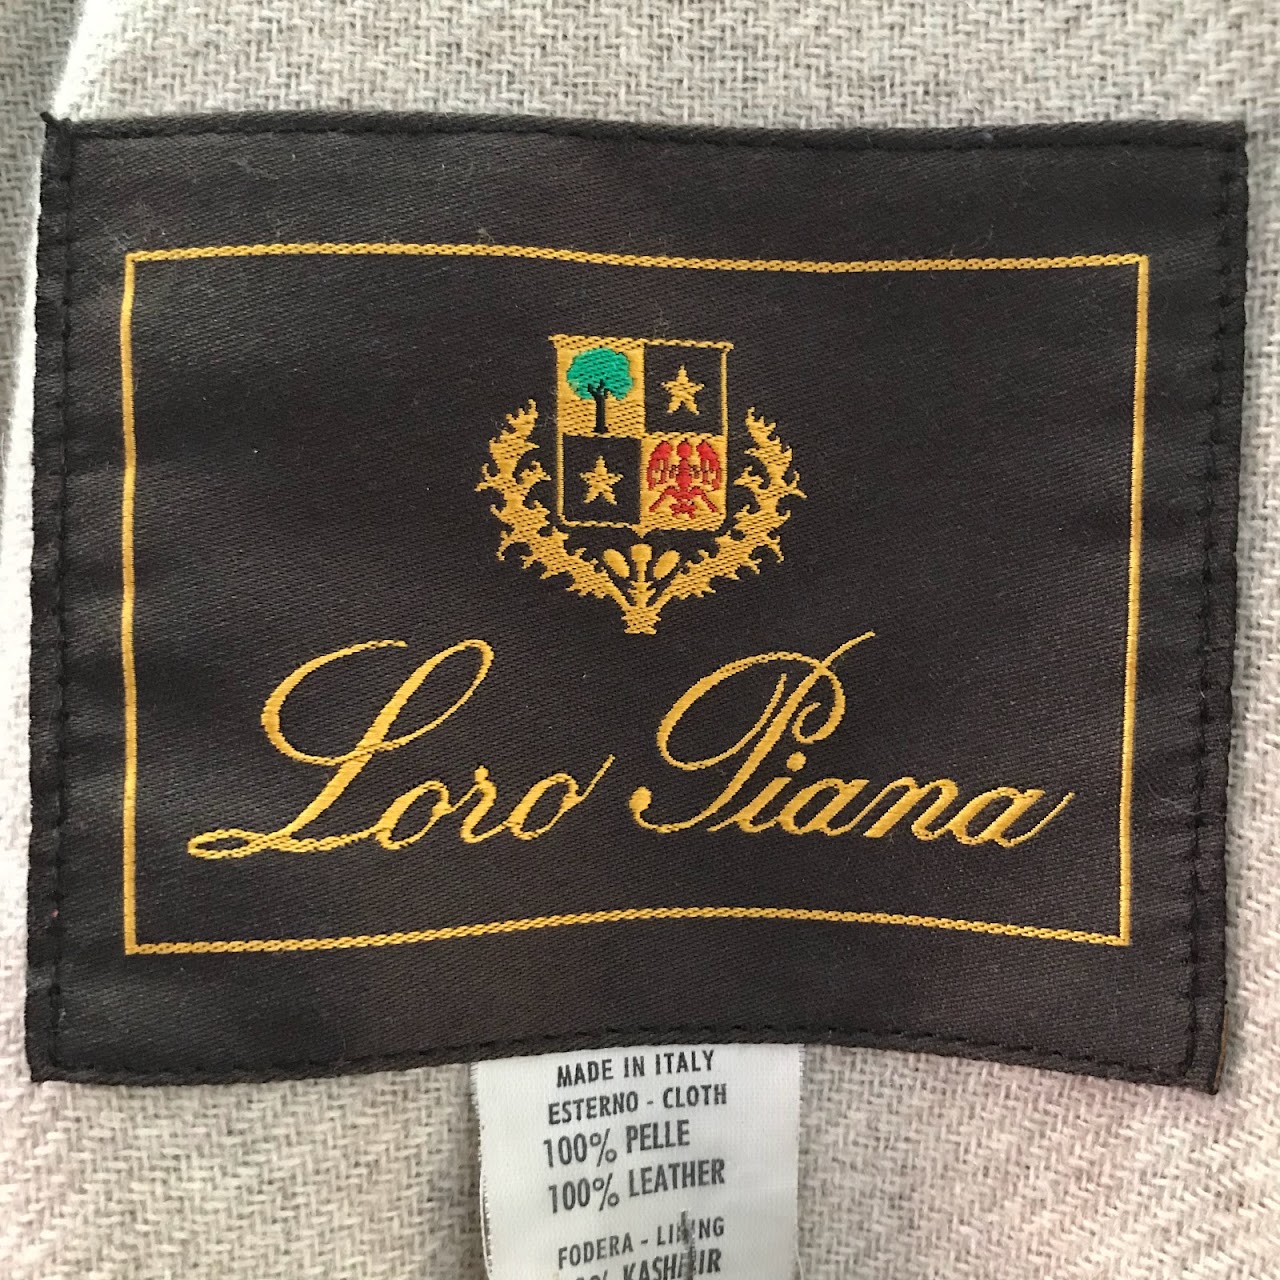 Loro Piana Leather Jacket